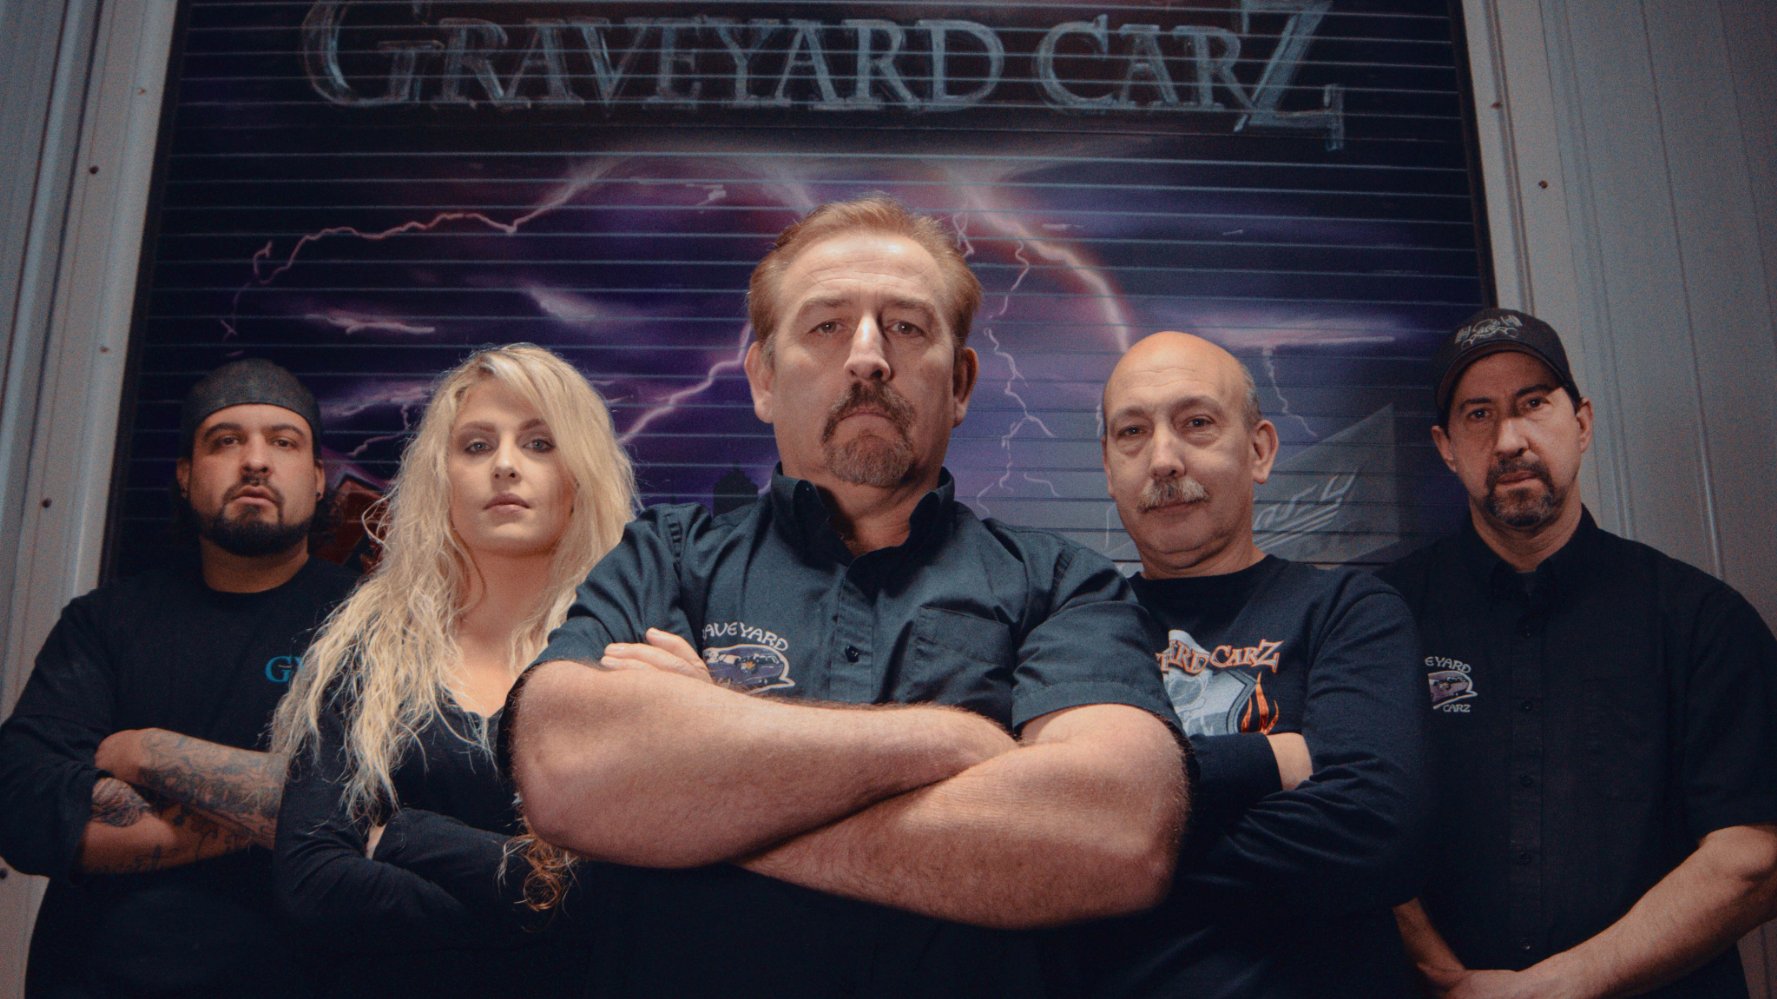 Watch Graveyard Carz - Season 7